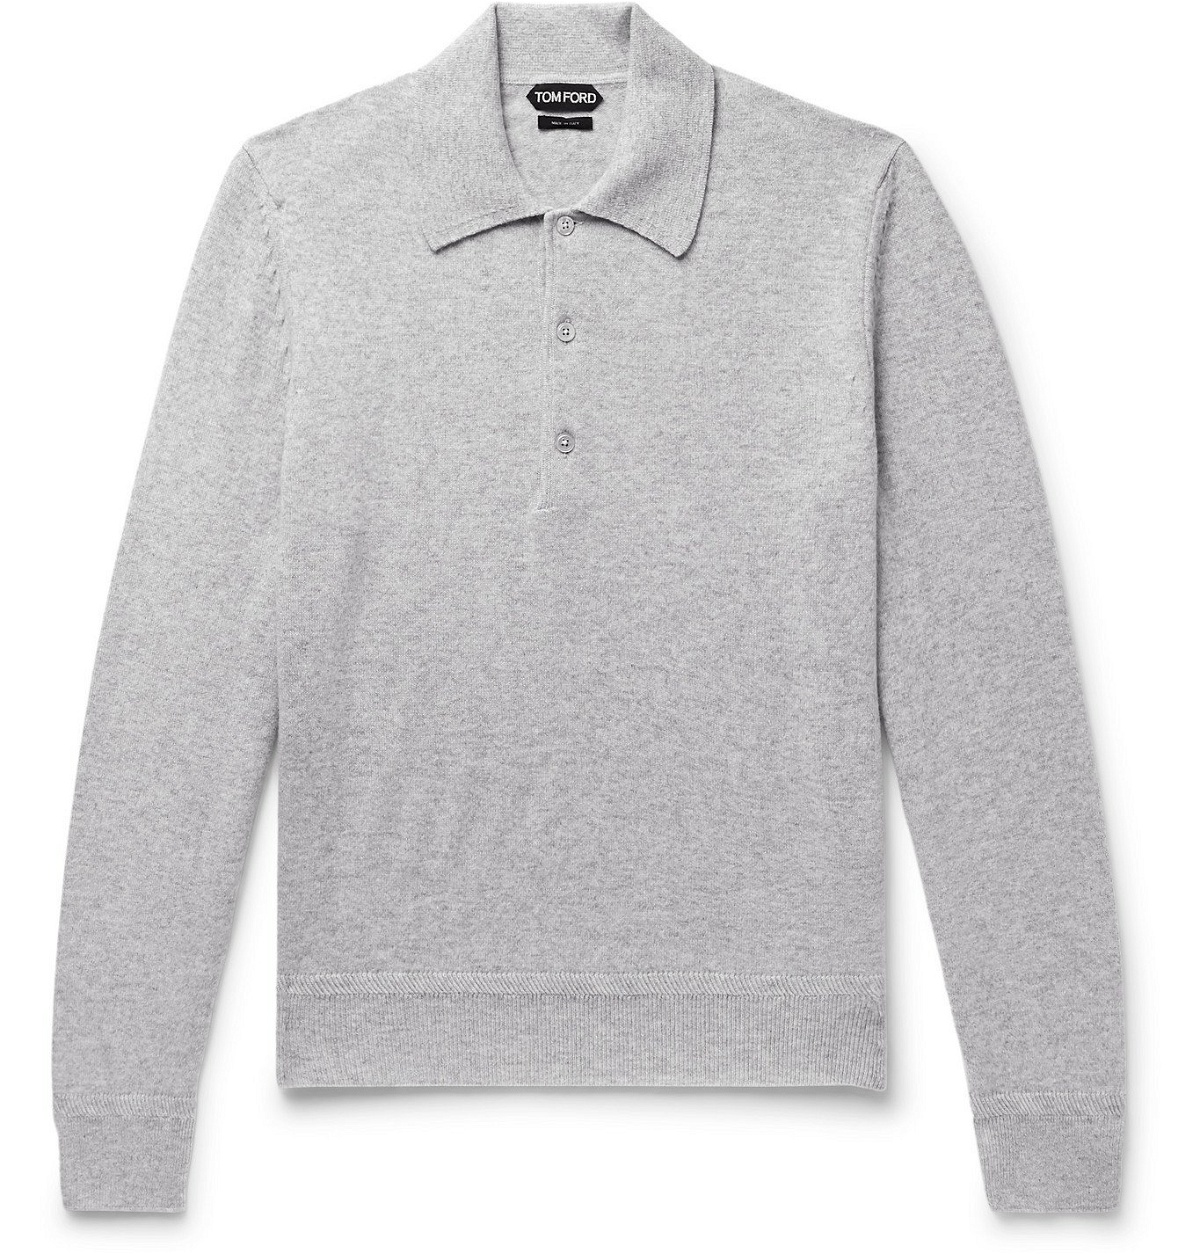 TOM FORD - Mélange Cashmere Polo Shirt - Gray TOM FORD